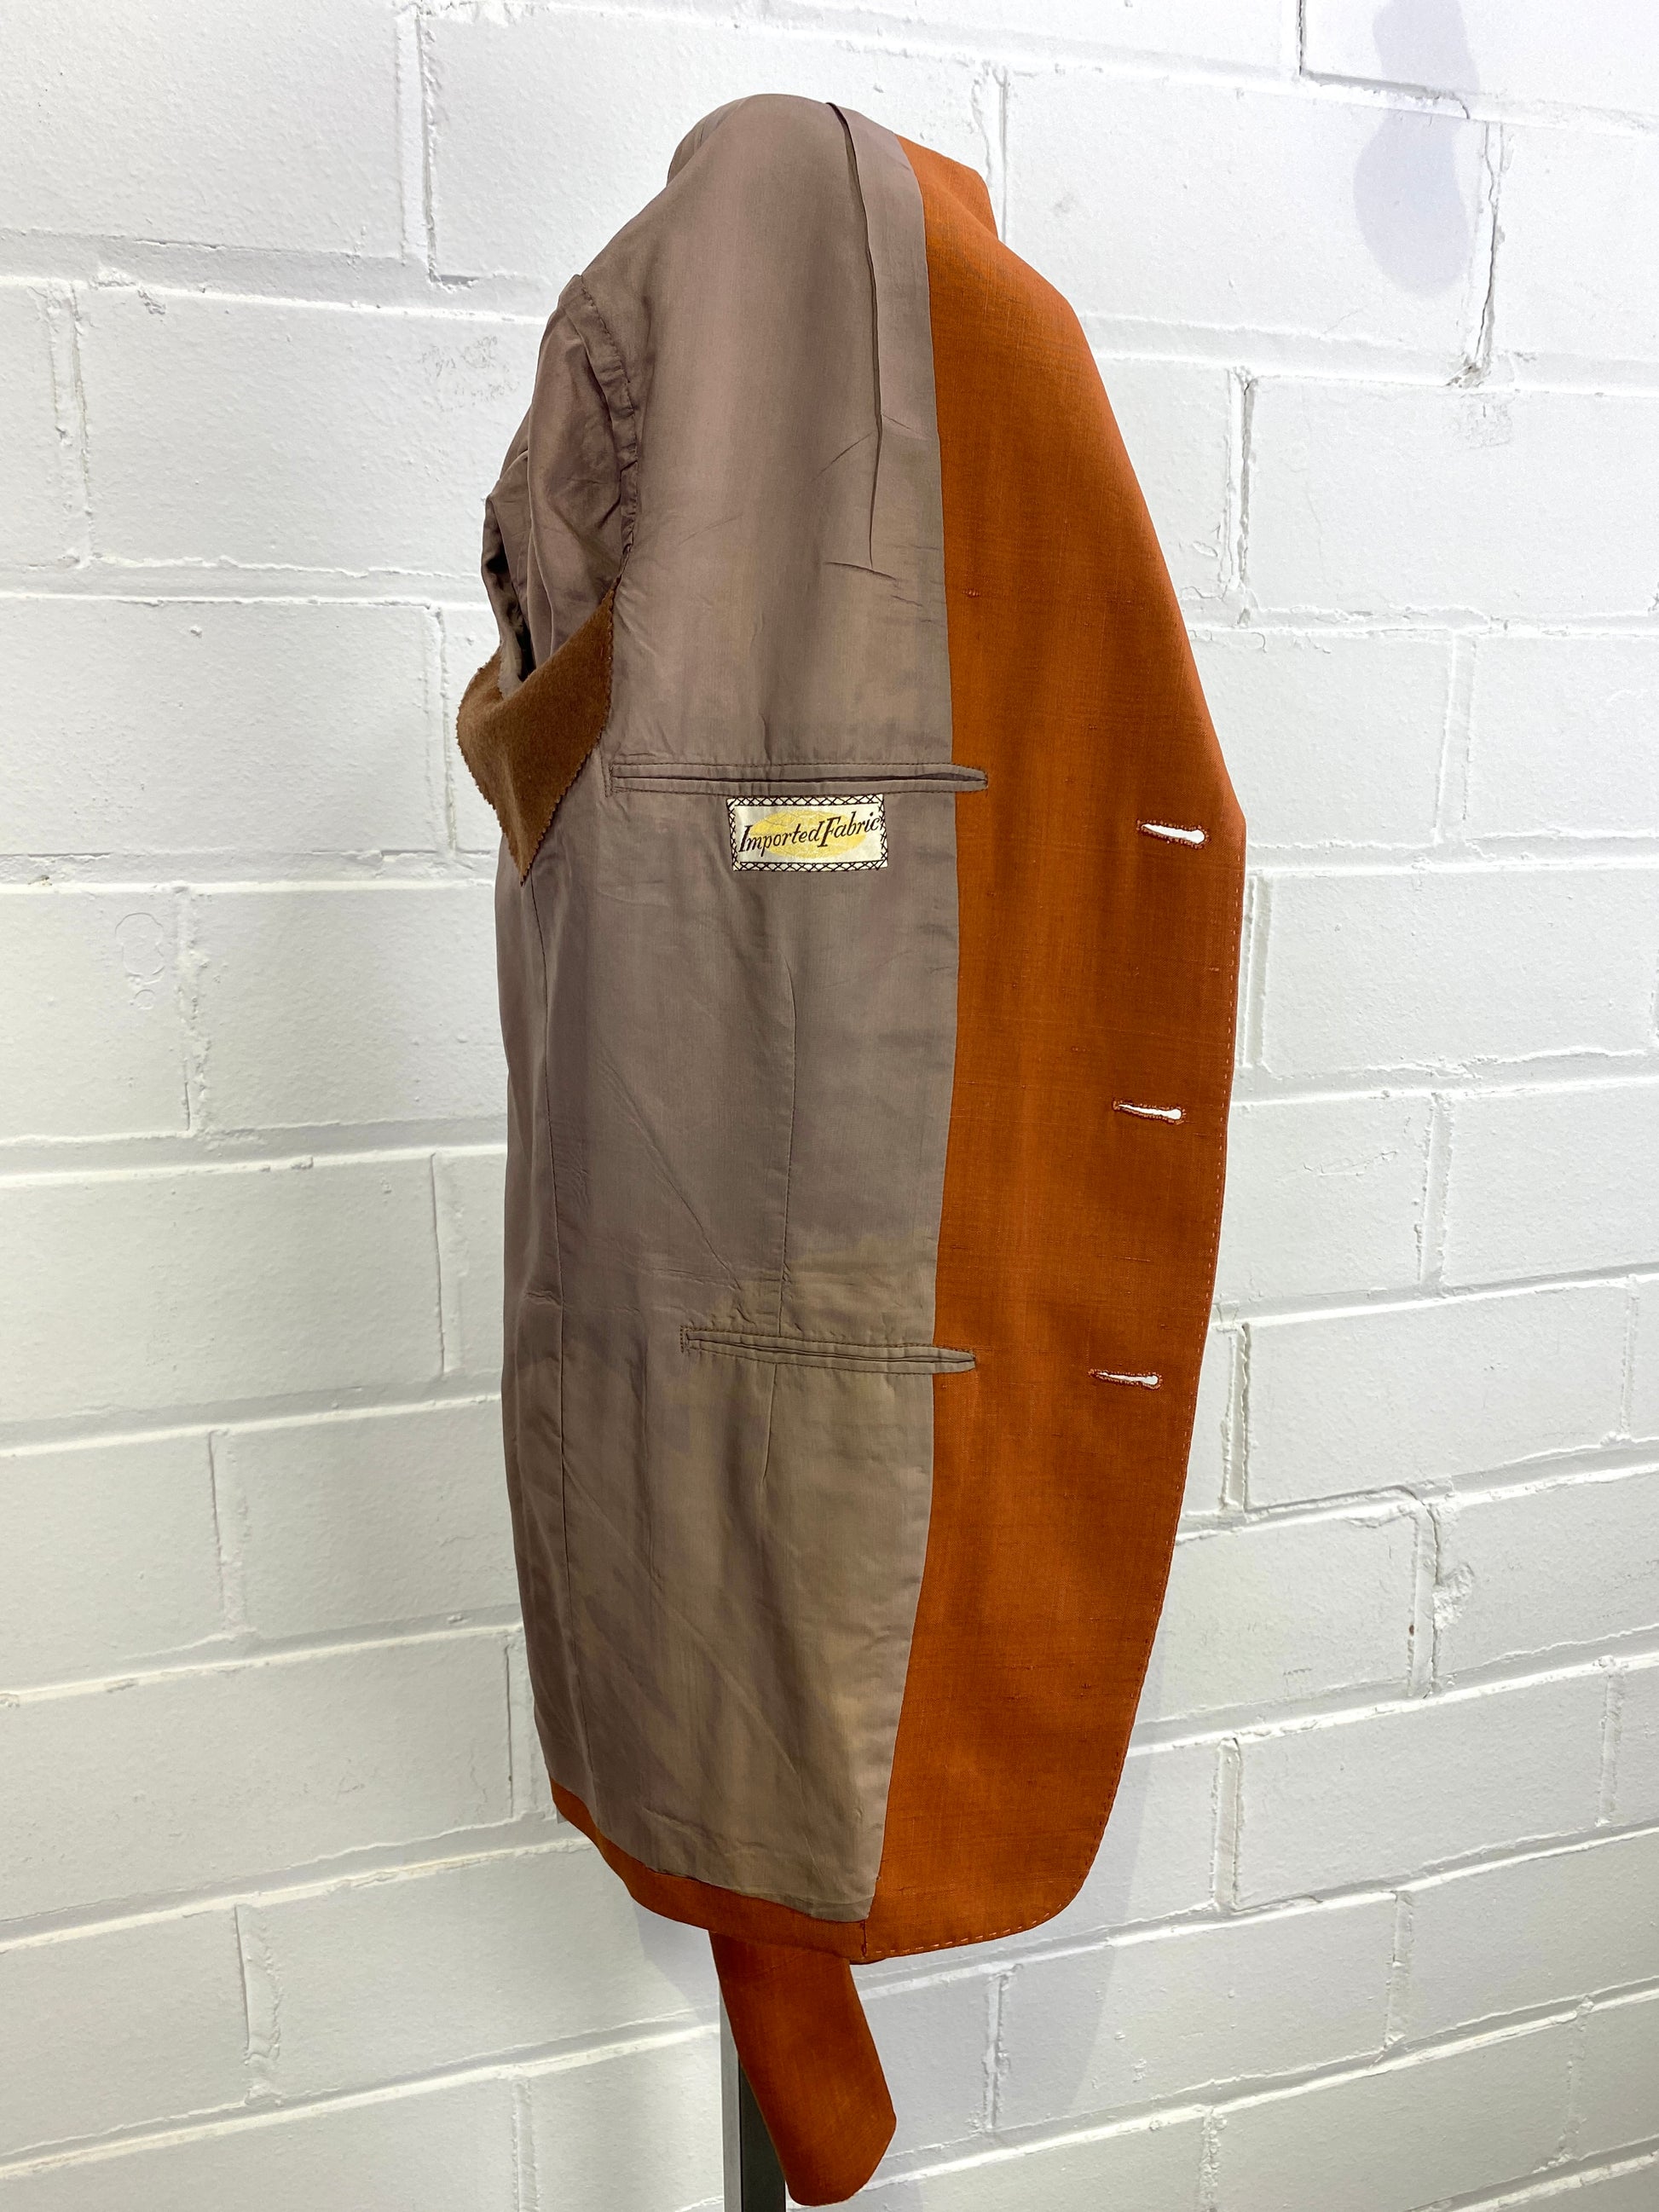 Vintage 1960s Men's Orange Silk Weave Suit Jacket, Large 